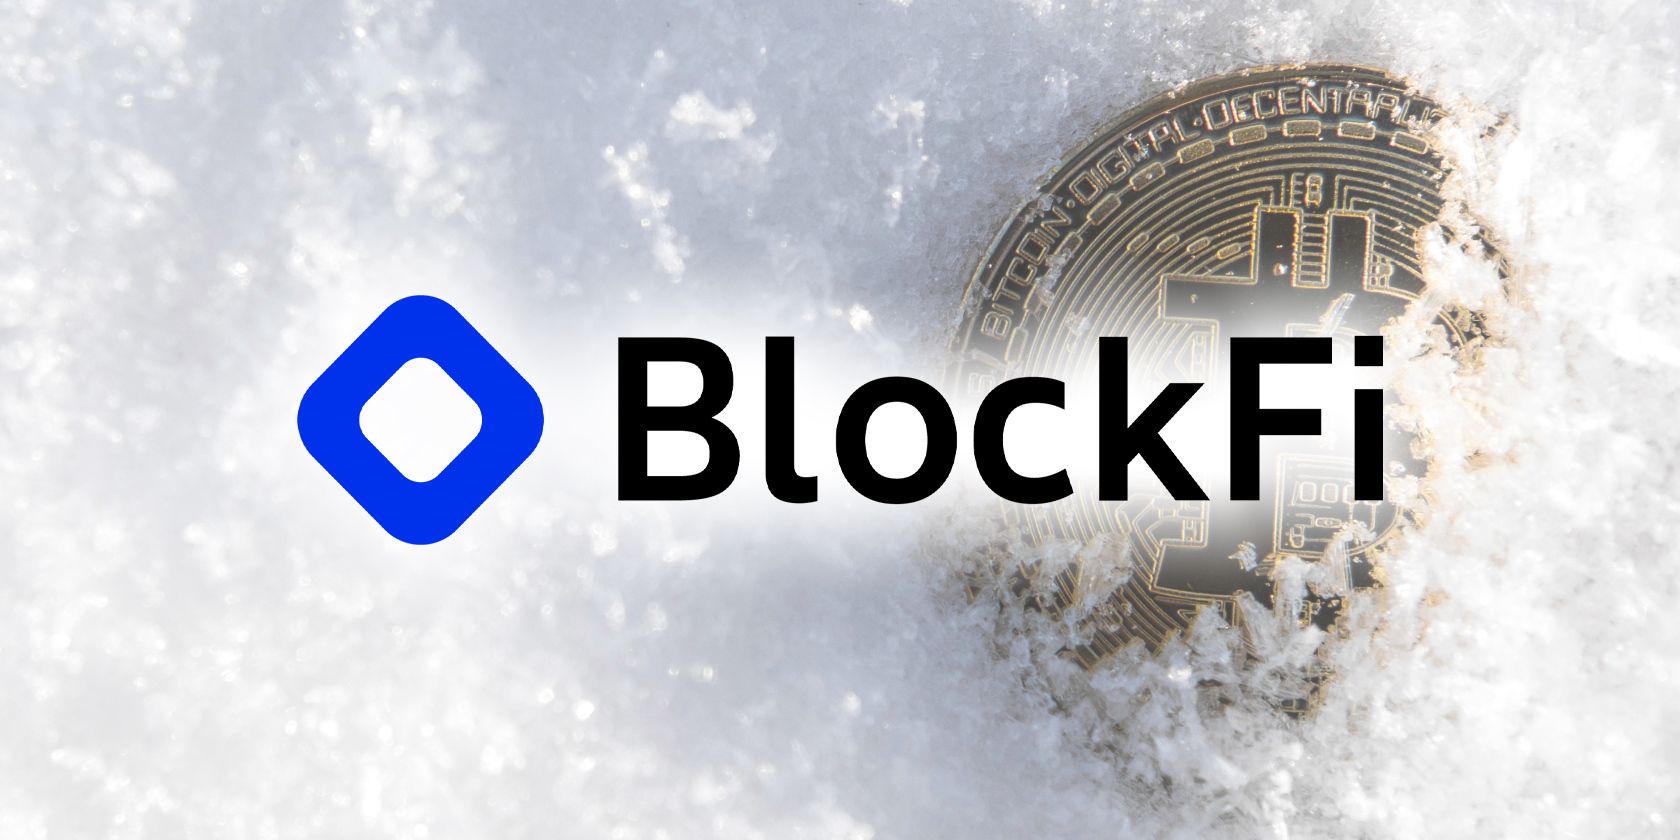 blockfi logo on bitcoin in snow background feature